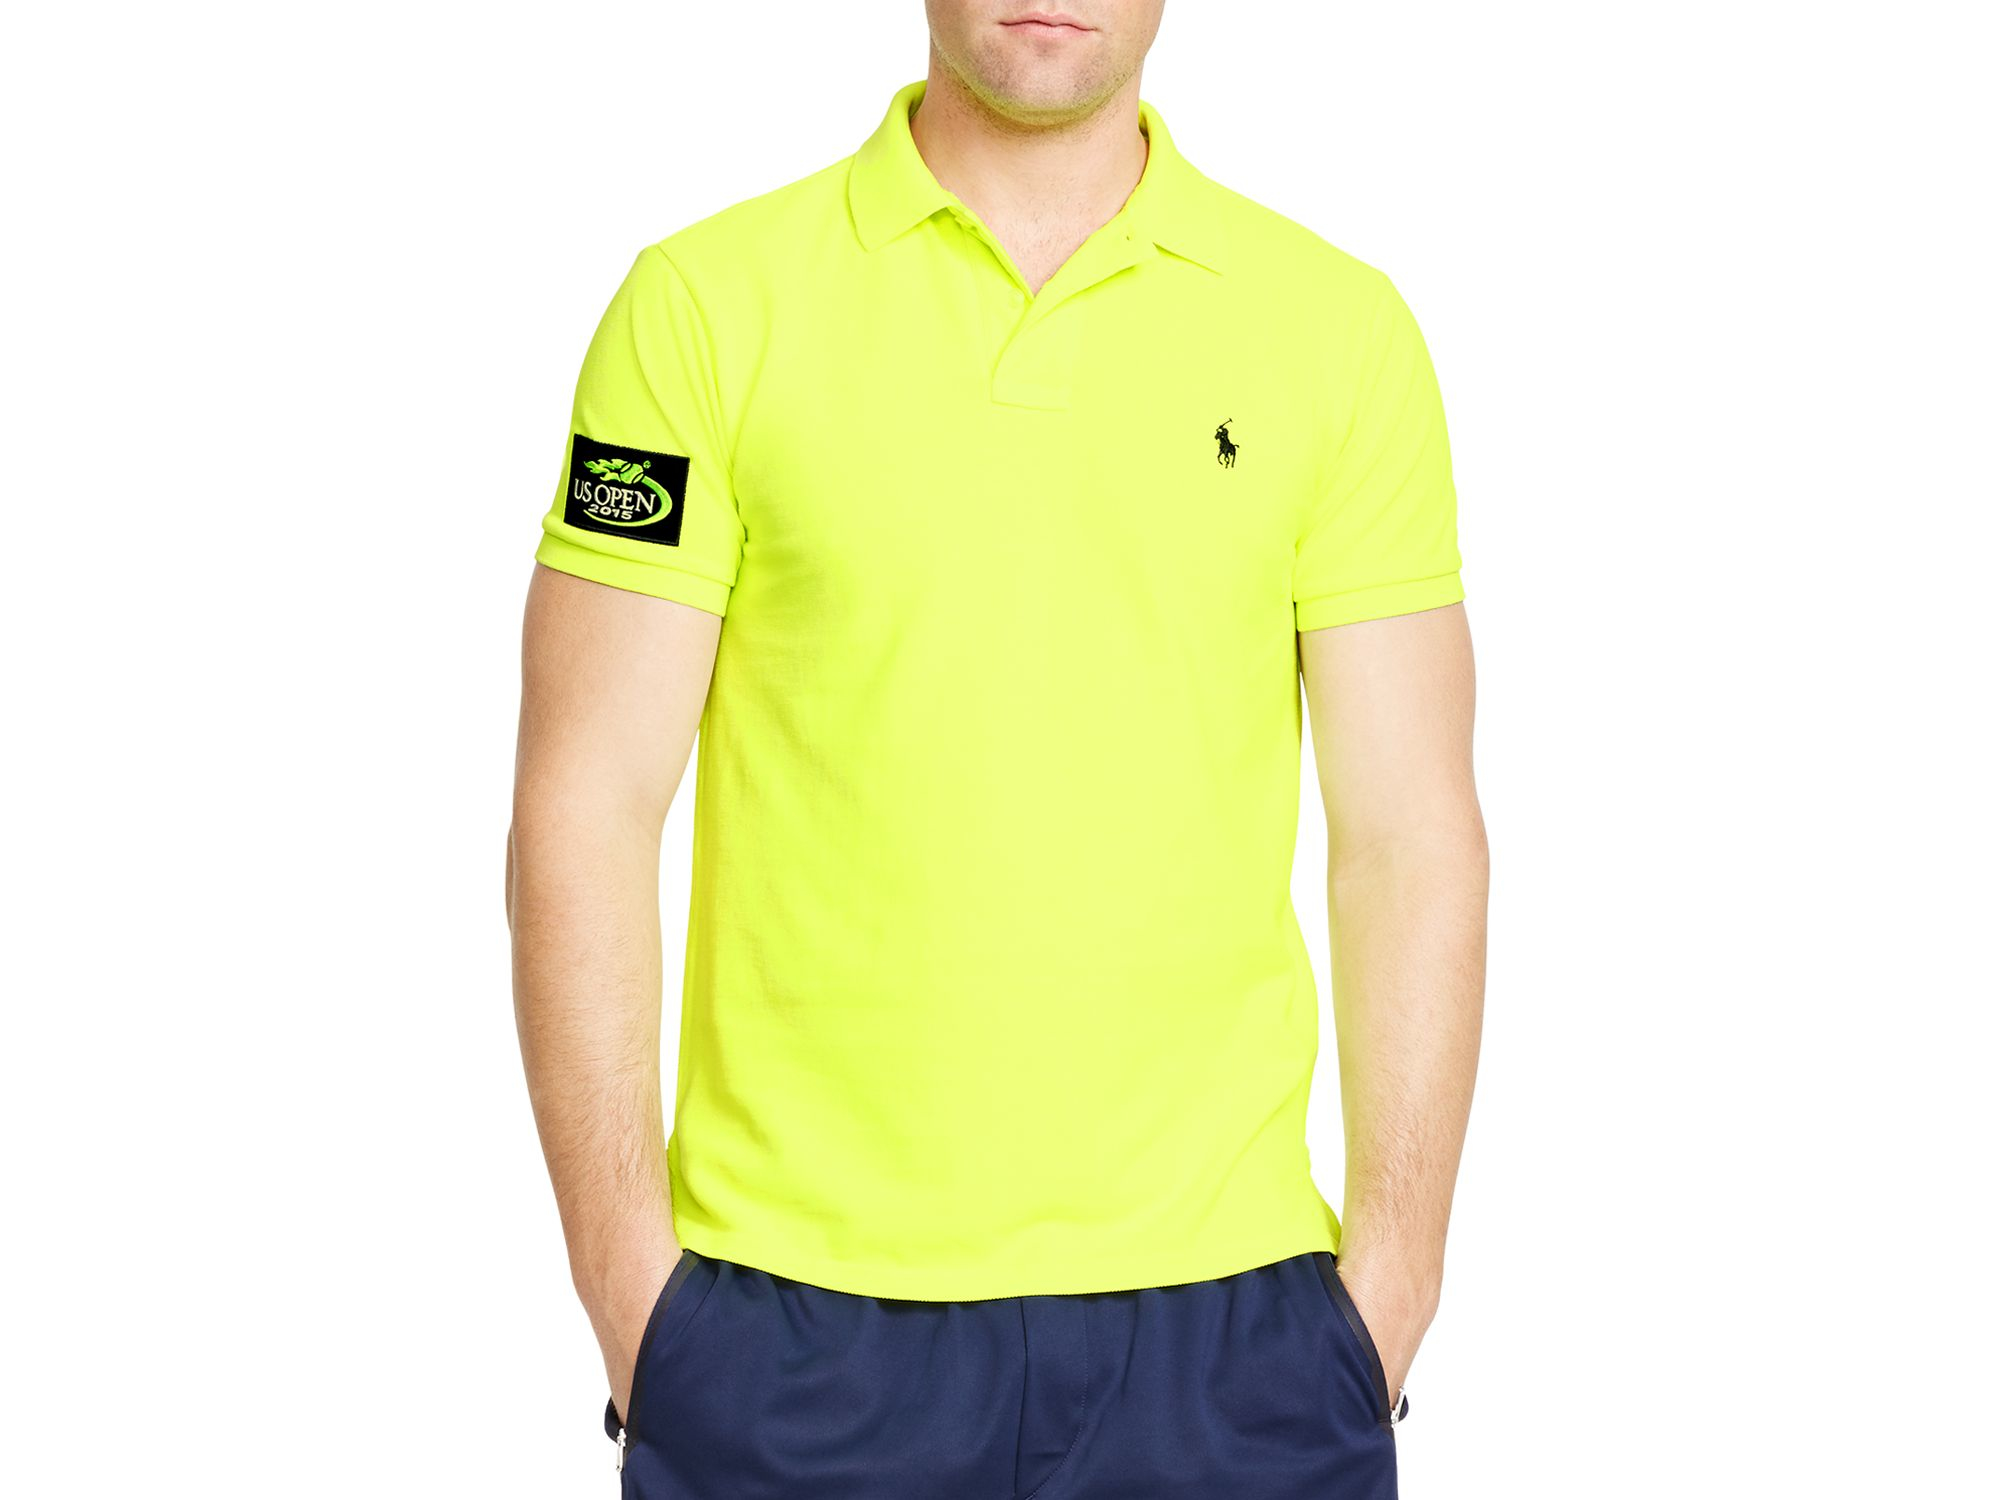 Neon Yellow Polo Shirt Deals, 54% OFF | ilikepinga.com